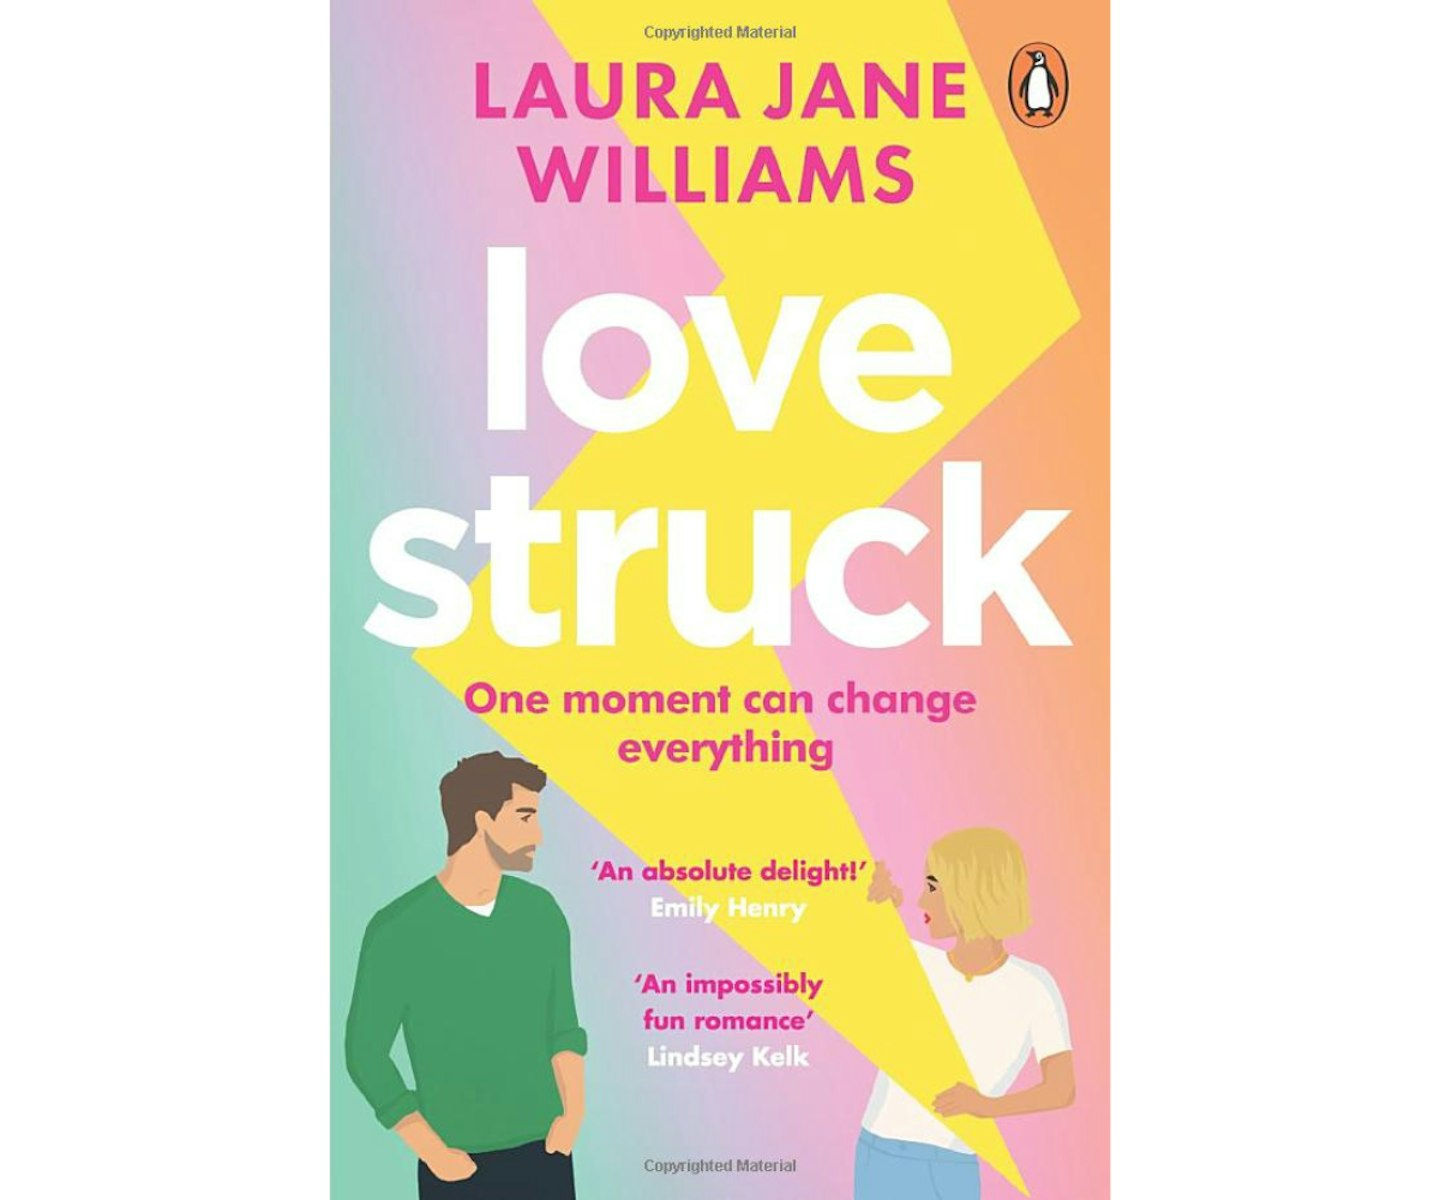 Lovestruck by Laura Jane Williams